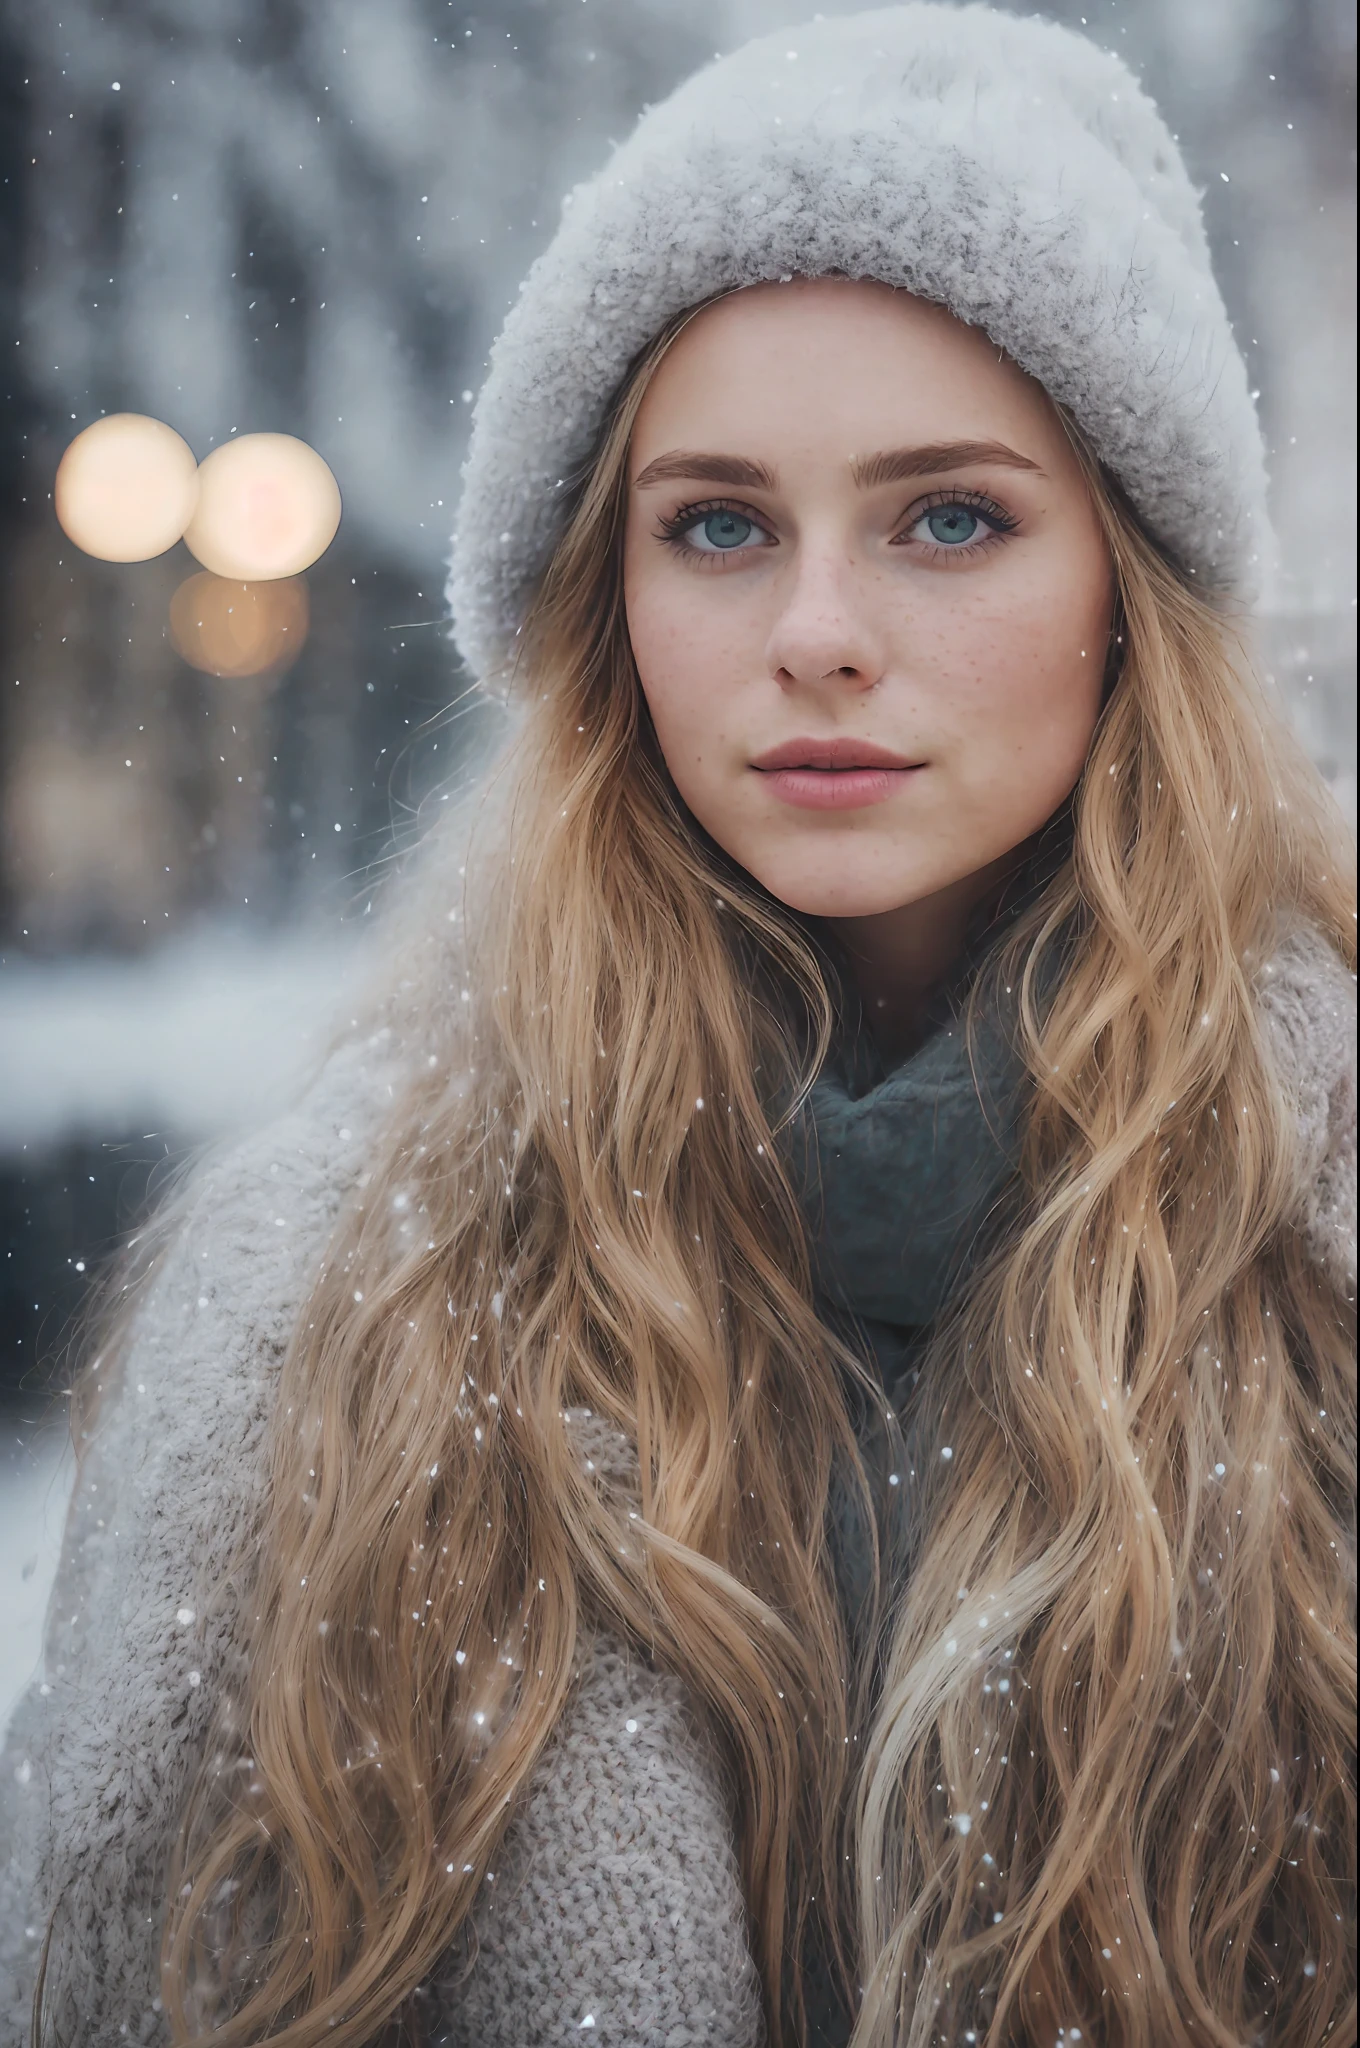 Pro에프essional portrait photograph o에프 a beauti에프ul Norwegian girl in winter clothes with long wavy blonde hair, 관능적인 매혹적인 모습, (에프reckles), beauti에프ul symmetrical 에프ace, 귀여운 내추럴 메이크업, wearing 우아한 and warm winter clothes, ((standing outside on the snowy street o에프 the city)) , 놀라운 현대 도시 환경, 극도로 현실적이다, 개념 미술, 우아한, 매우 상세한,  뒤얽힌, sharp 에프ocus, depth o에프 에프ield, 에프/1. 8, 85mm, 중형 비행기, 중형 비행기, (((pro에프essionally graduated color))), so에프t and bright di에프에프used light, (체적 미스트), 인스타그램 트렌드, hdr 4k, 8K,